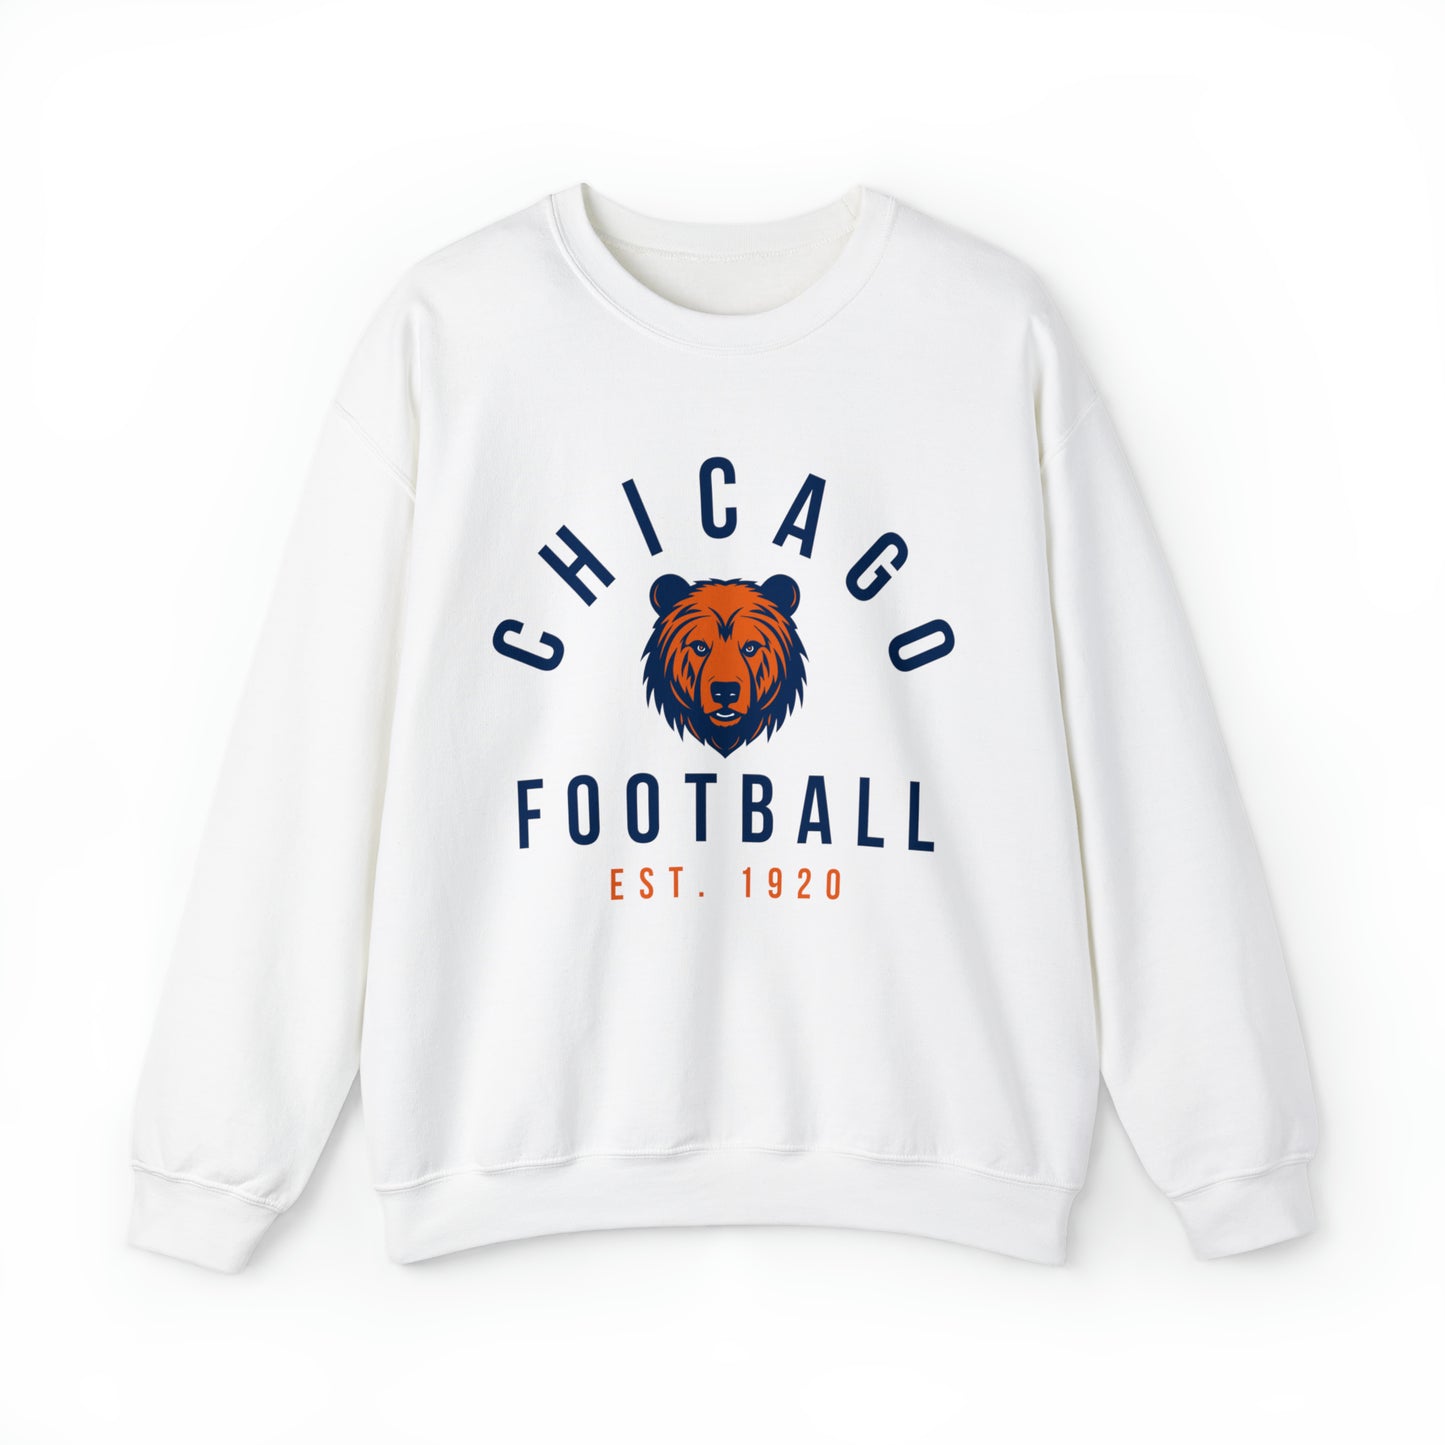 White Chicago Bears Crewneck Sweatshirt - Vintage Football - Retro Style Football Apparel - Design 4